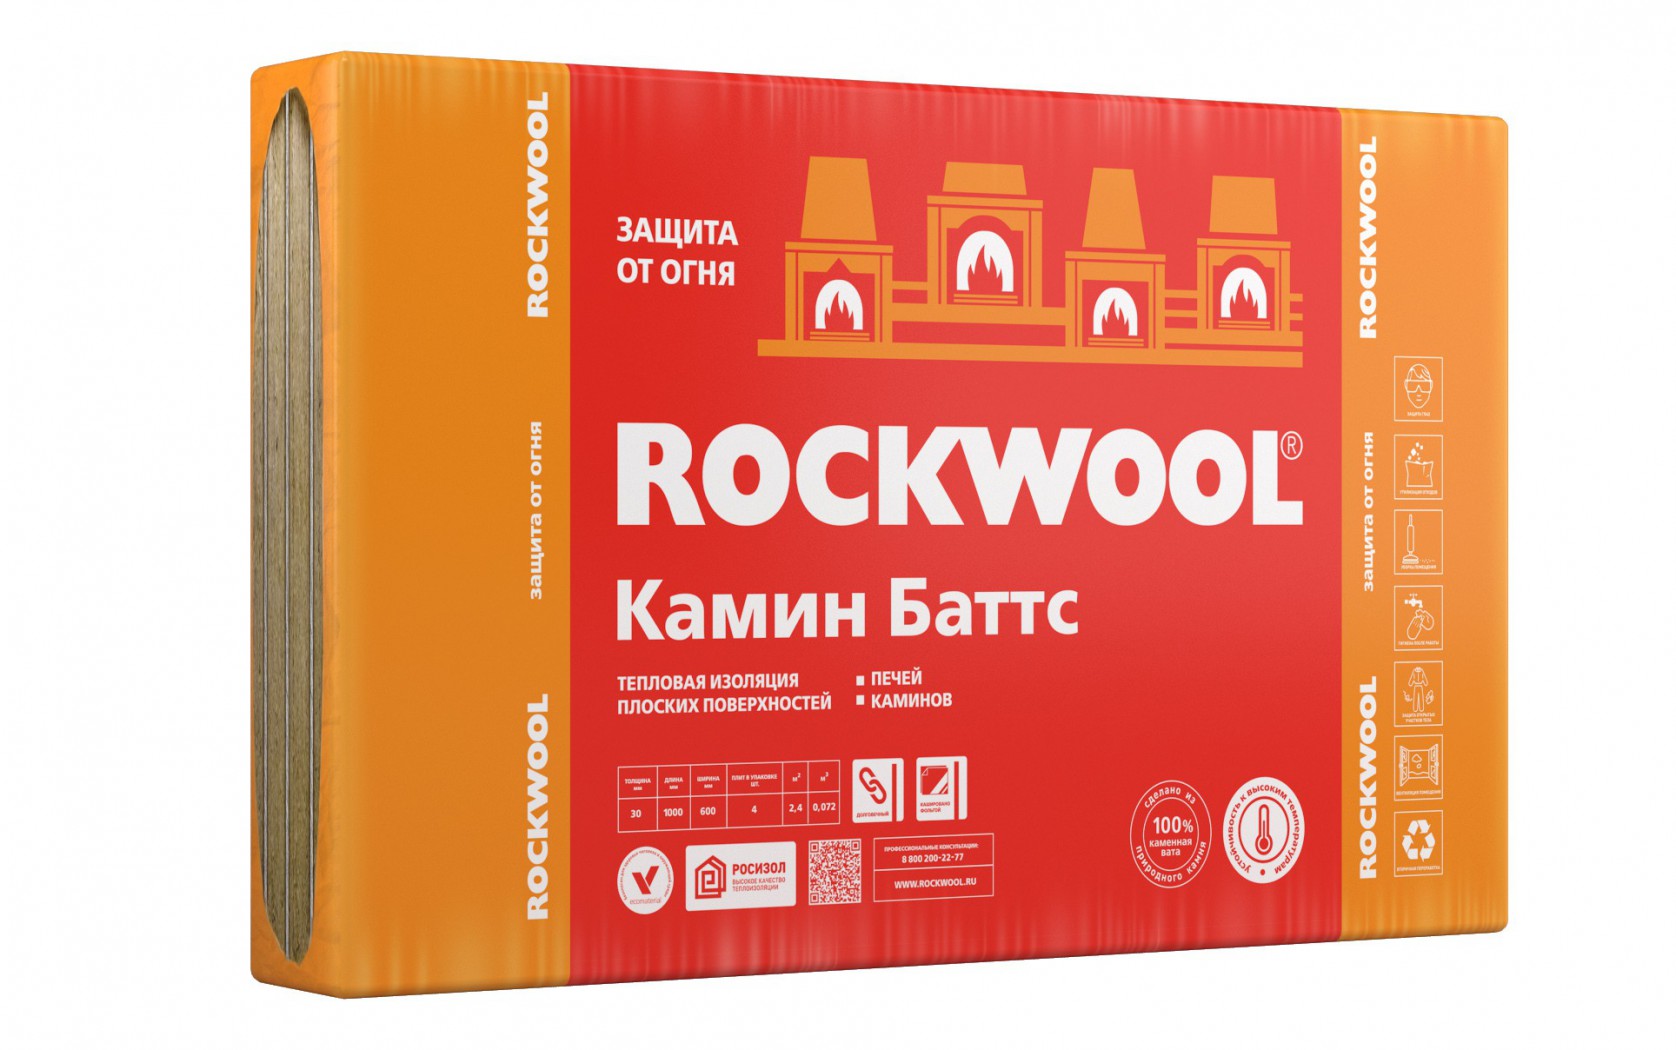 ROCKWOOL (Роквул) Камин Баттс